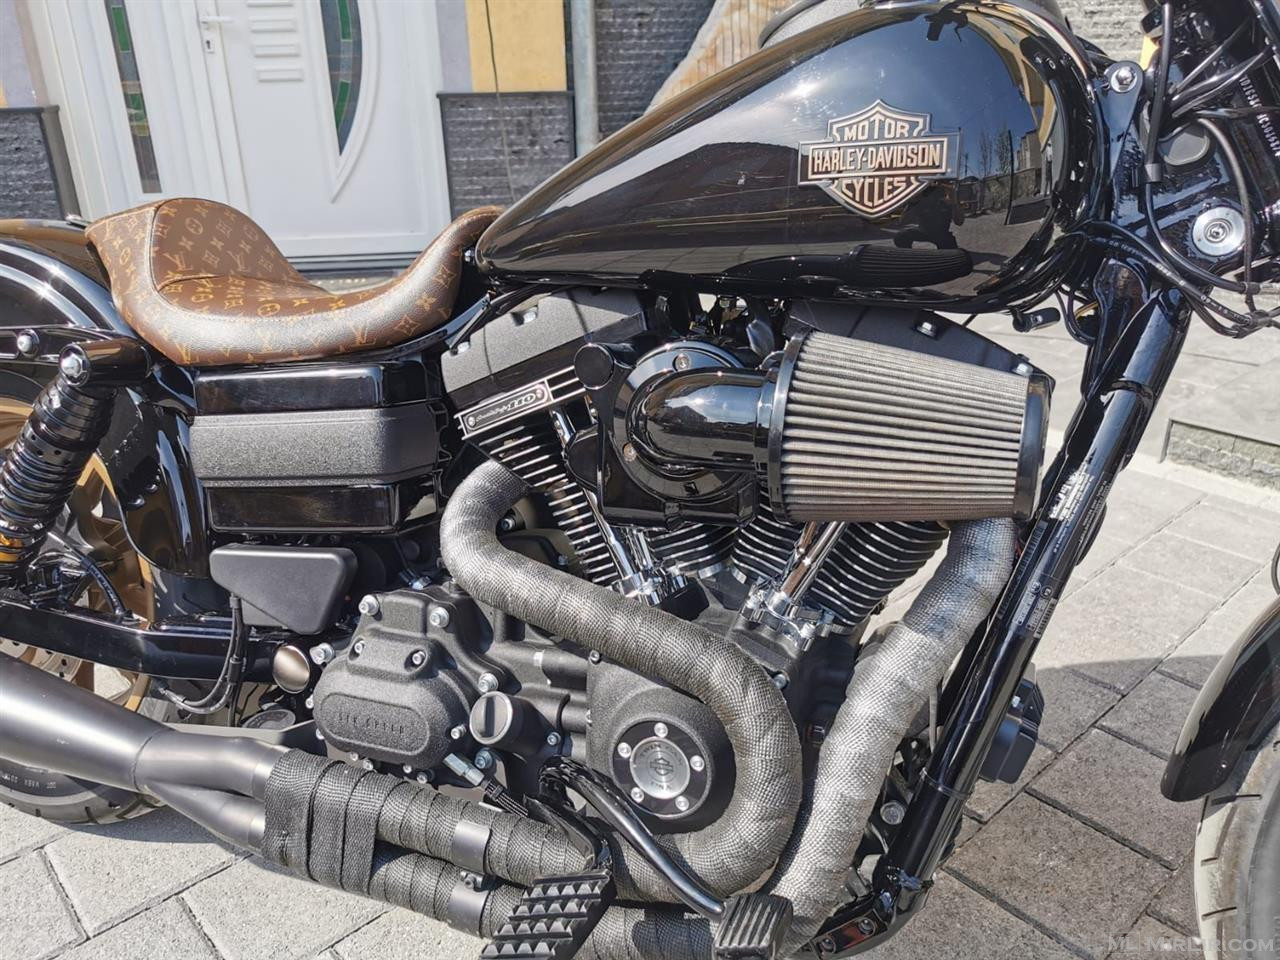 Harley Davidson FXDLS lowrider 1800cc